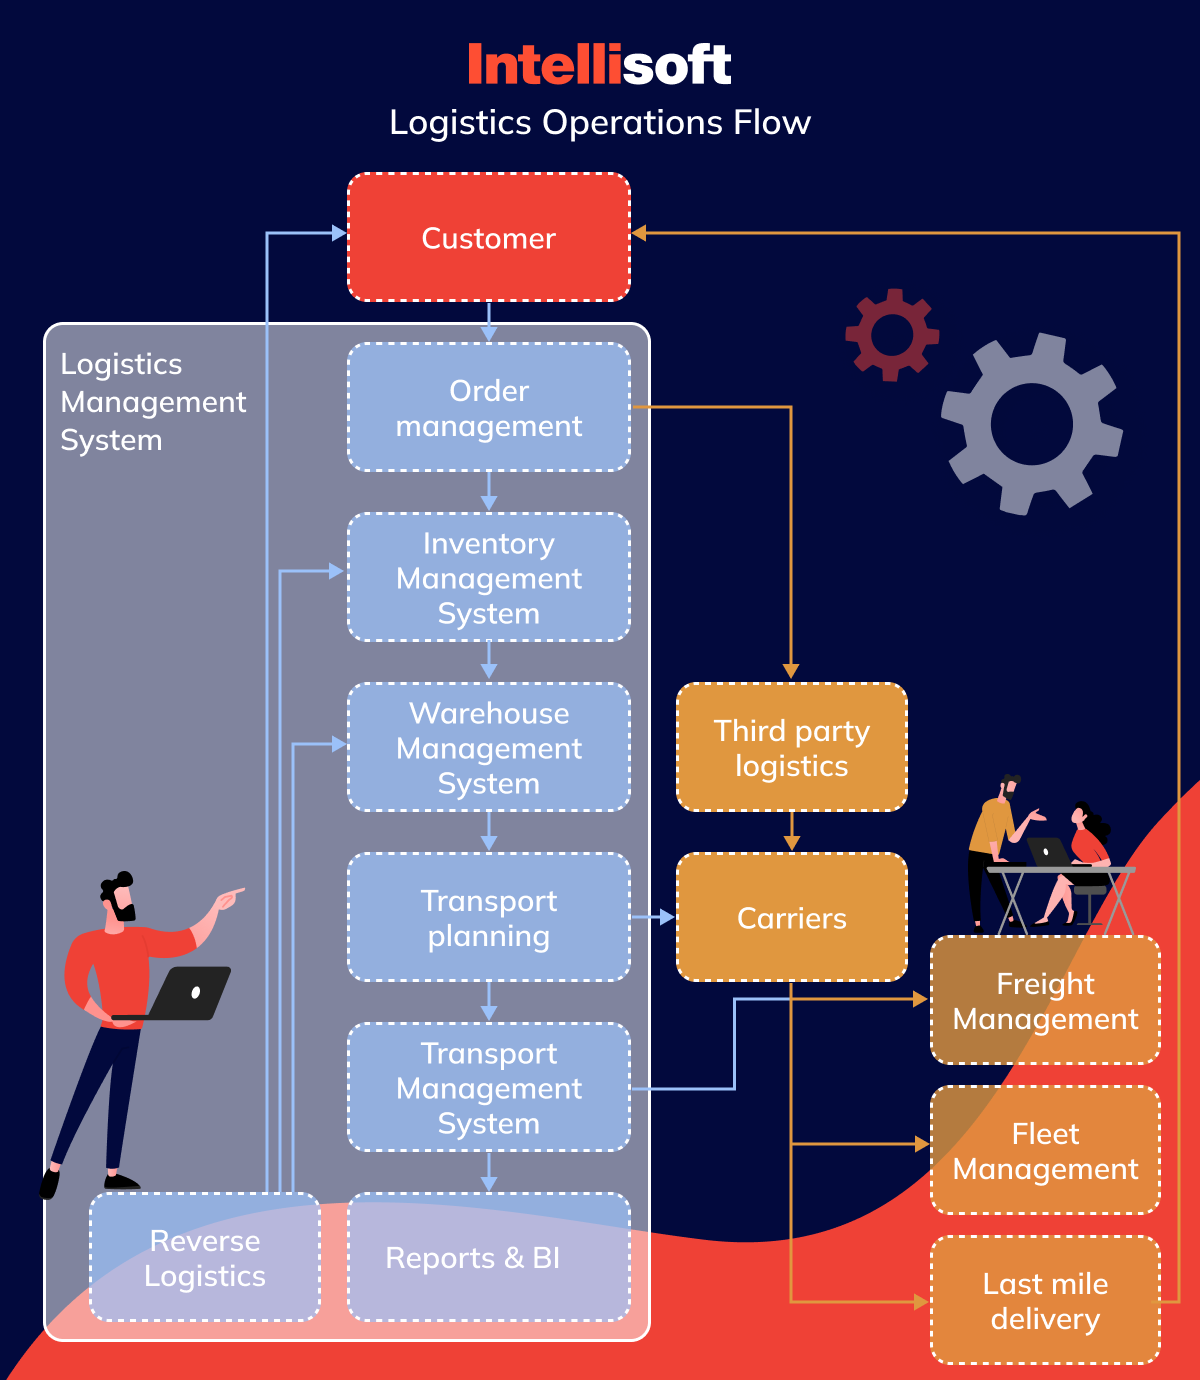 Logistics operations flow